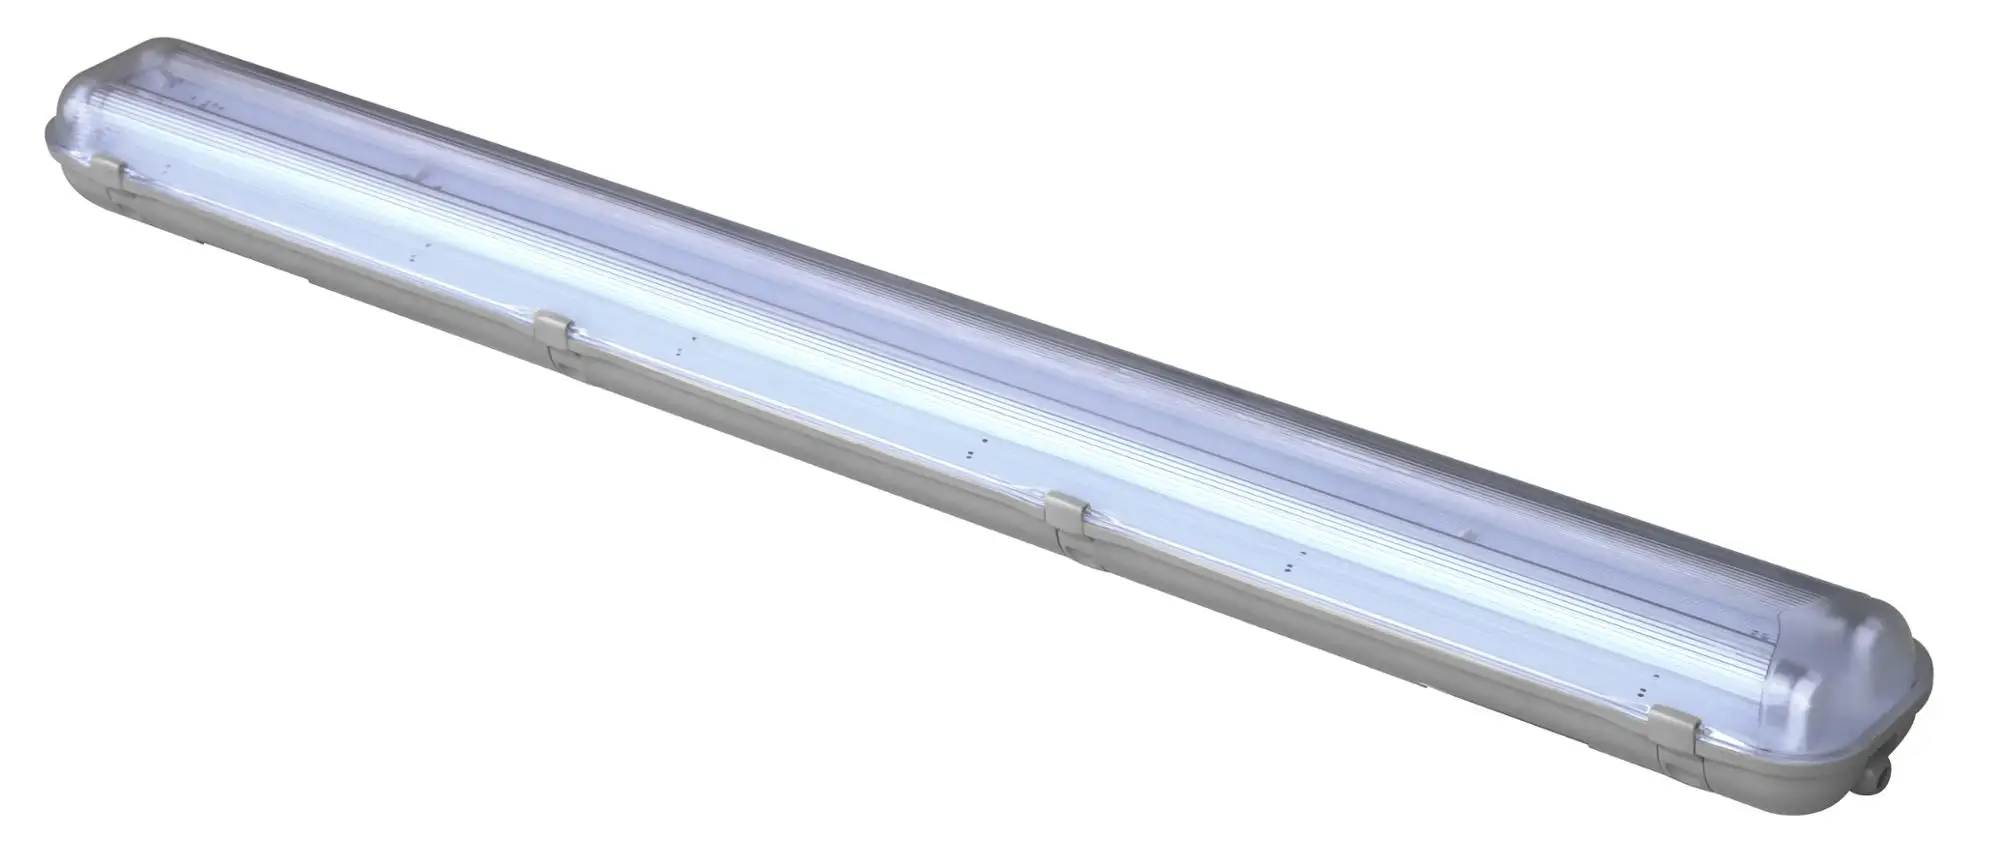 T8 tube 2x36w IP65 waterproof lighting fixture